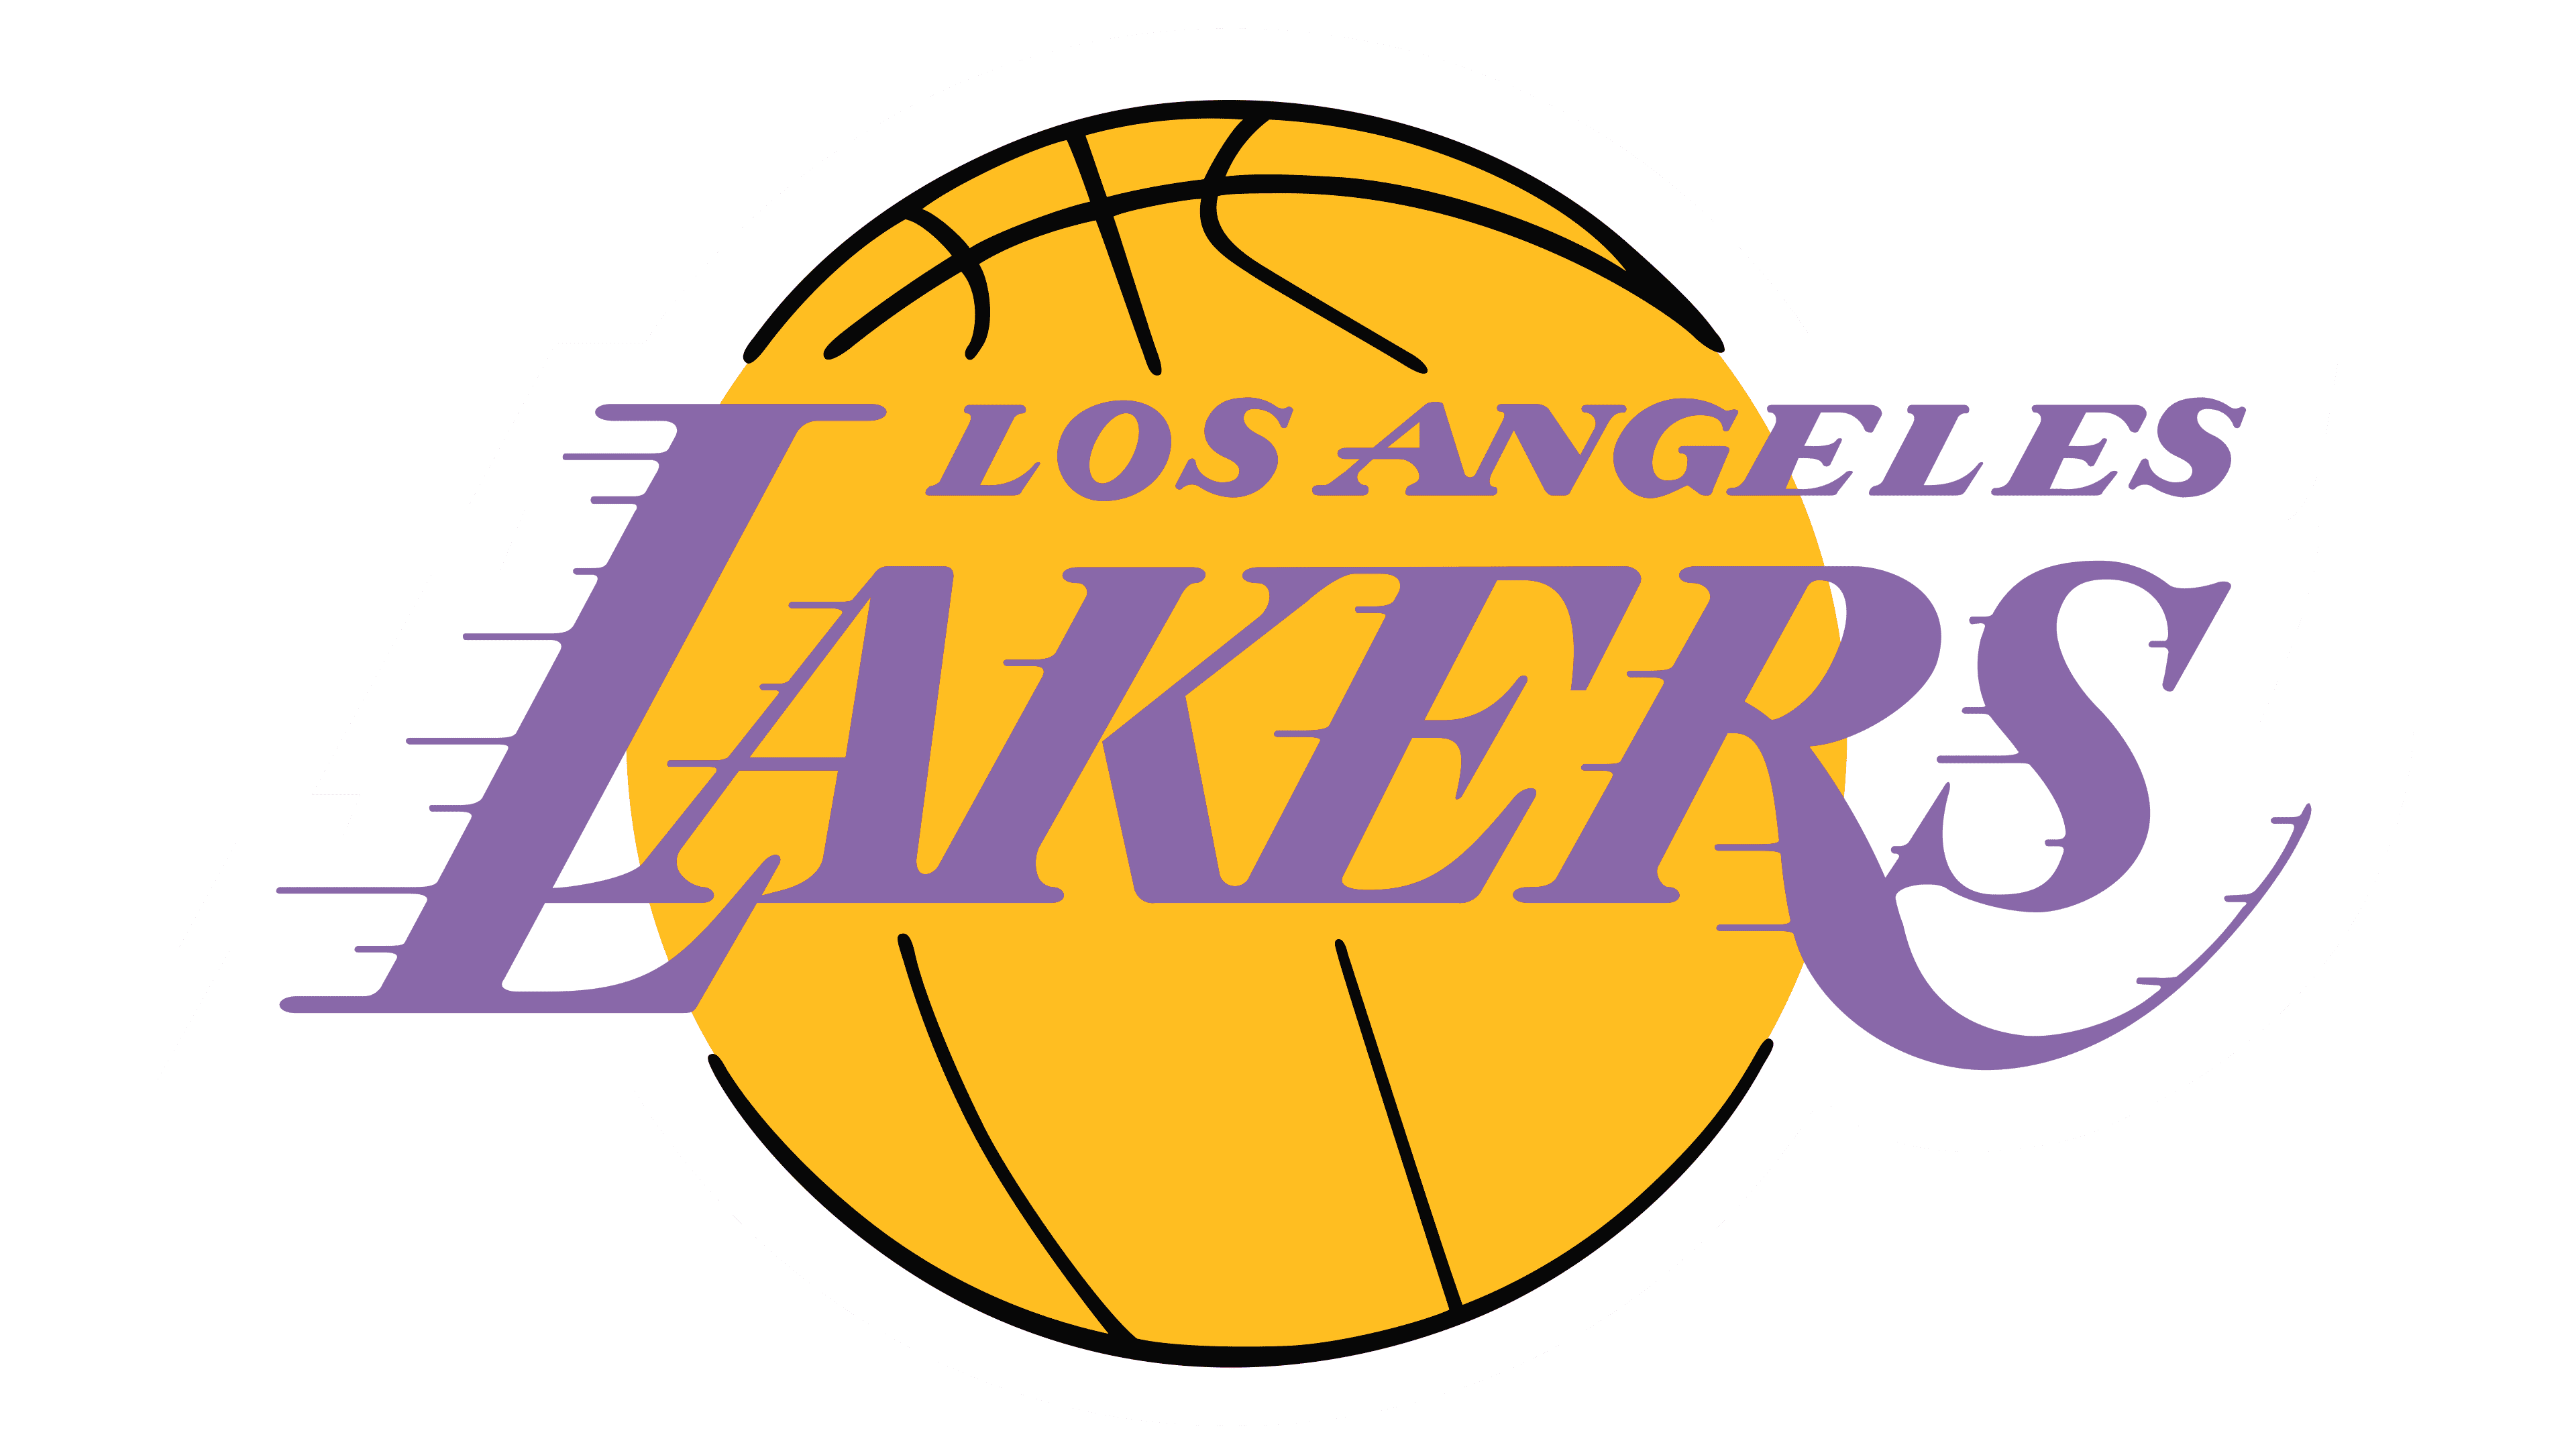 Los-Angeles-Lakers-Logo-1976.png